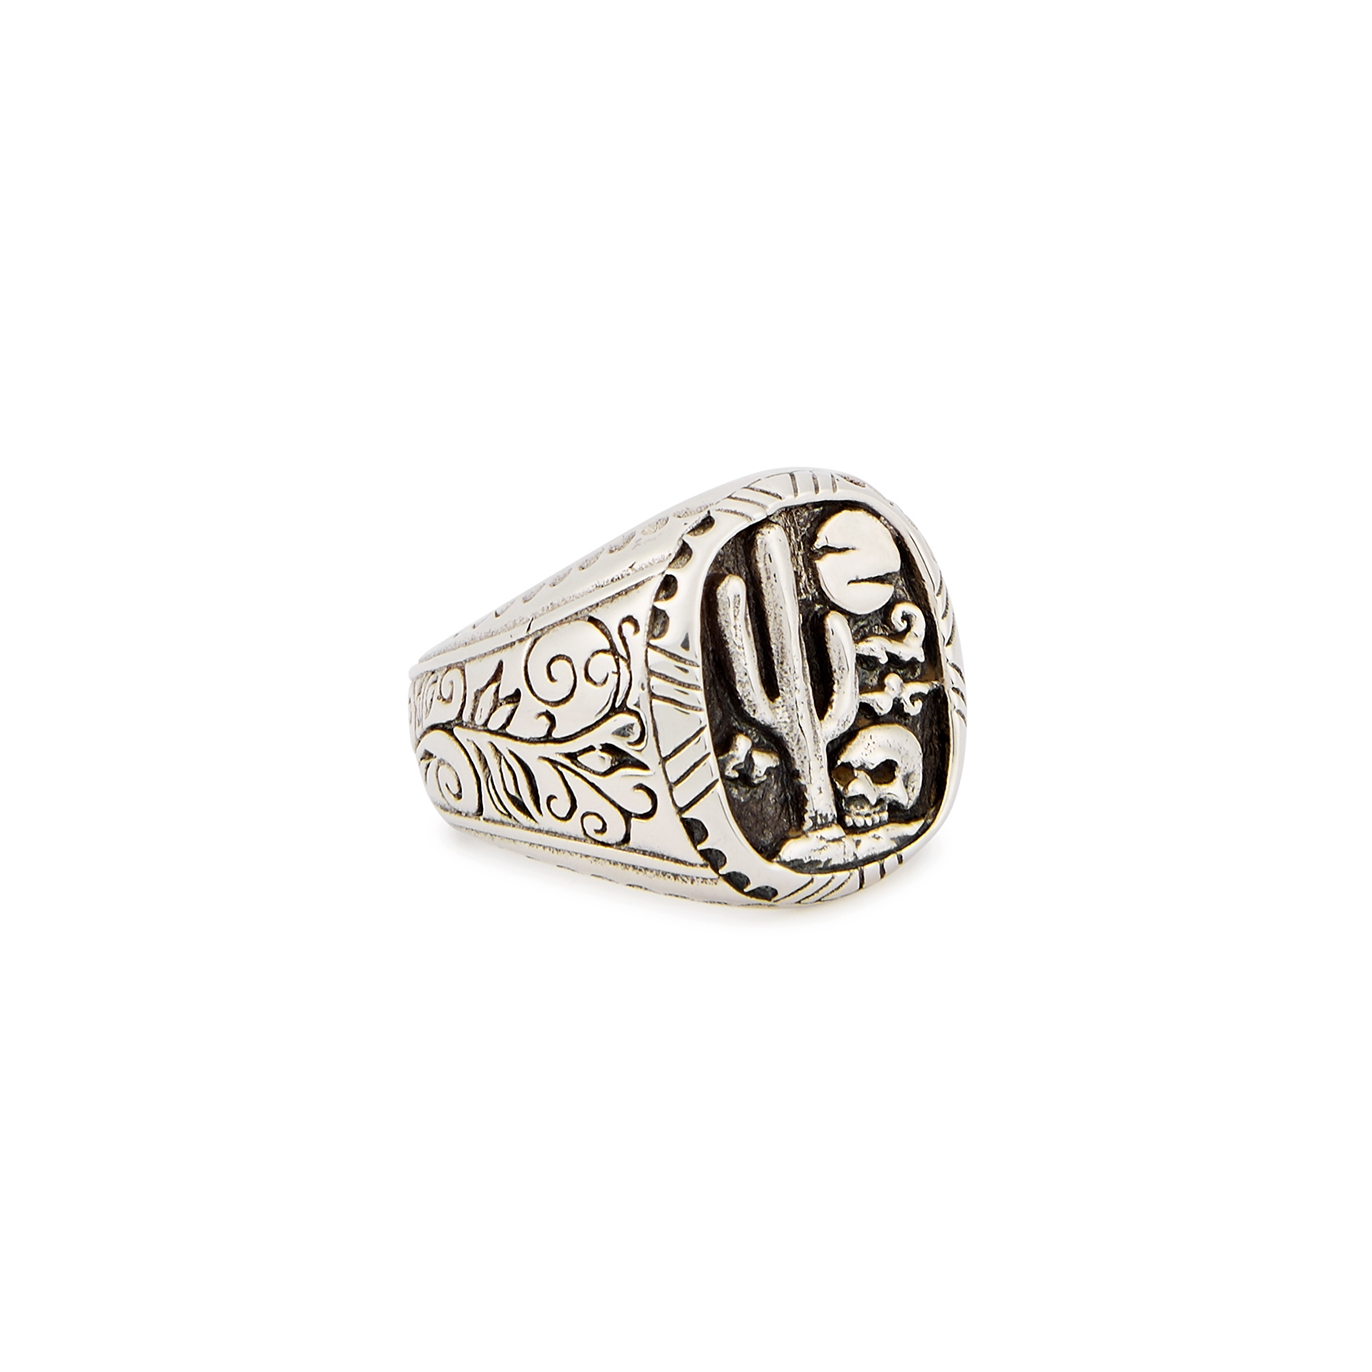 Tumbleweed Engraved Sterling Silver Ring